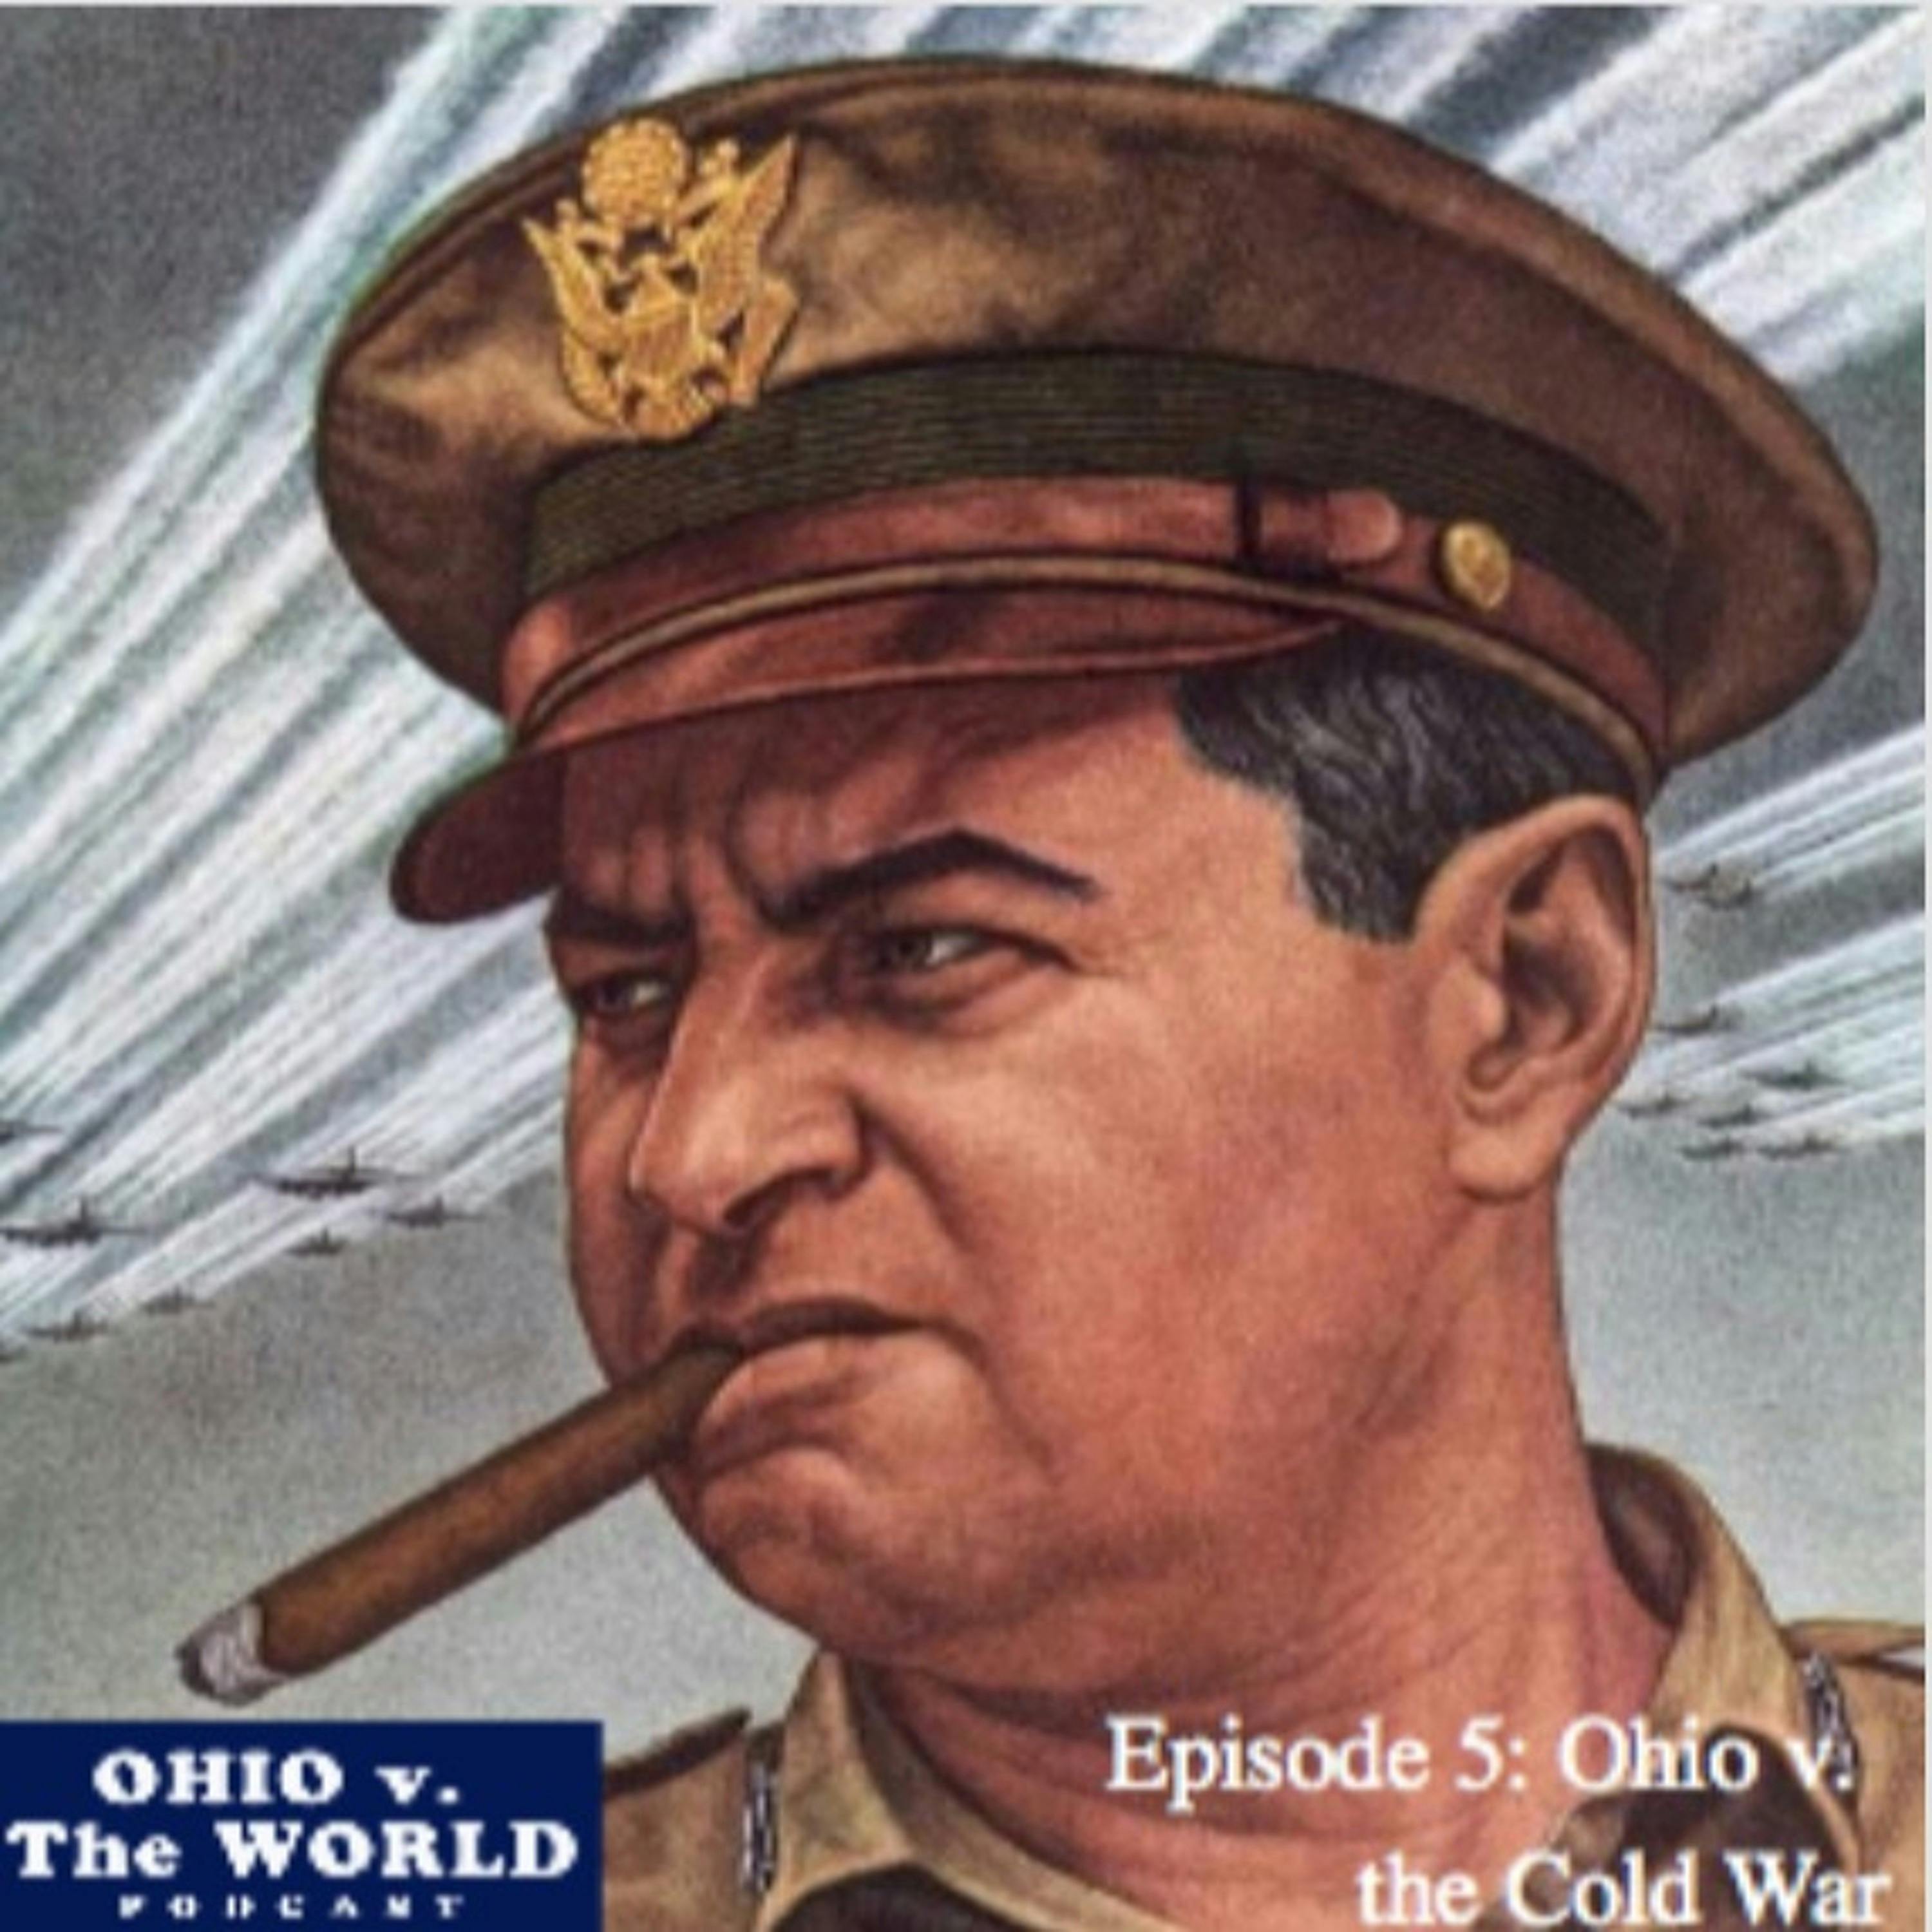 Episode 5: Ohio v. the Cold War (Curtis Lemay)